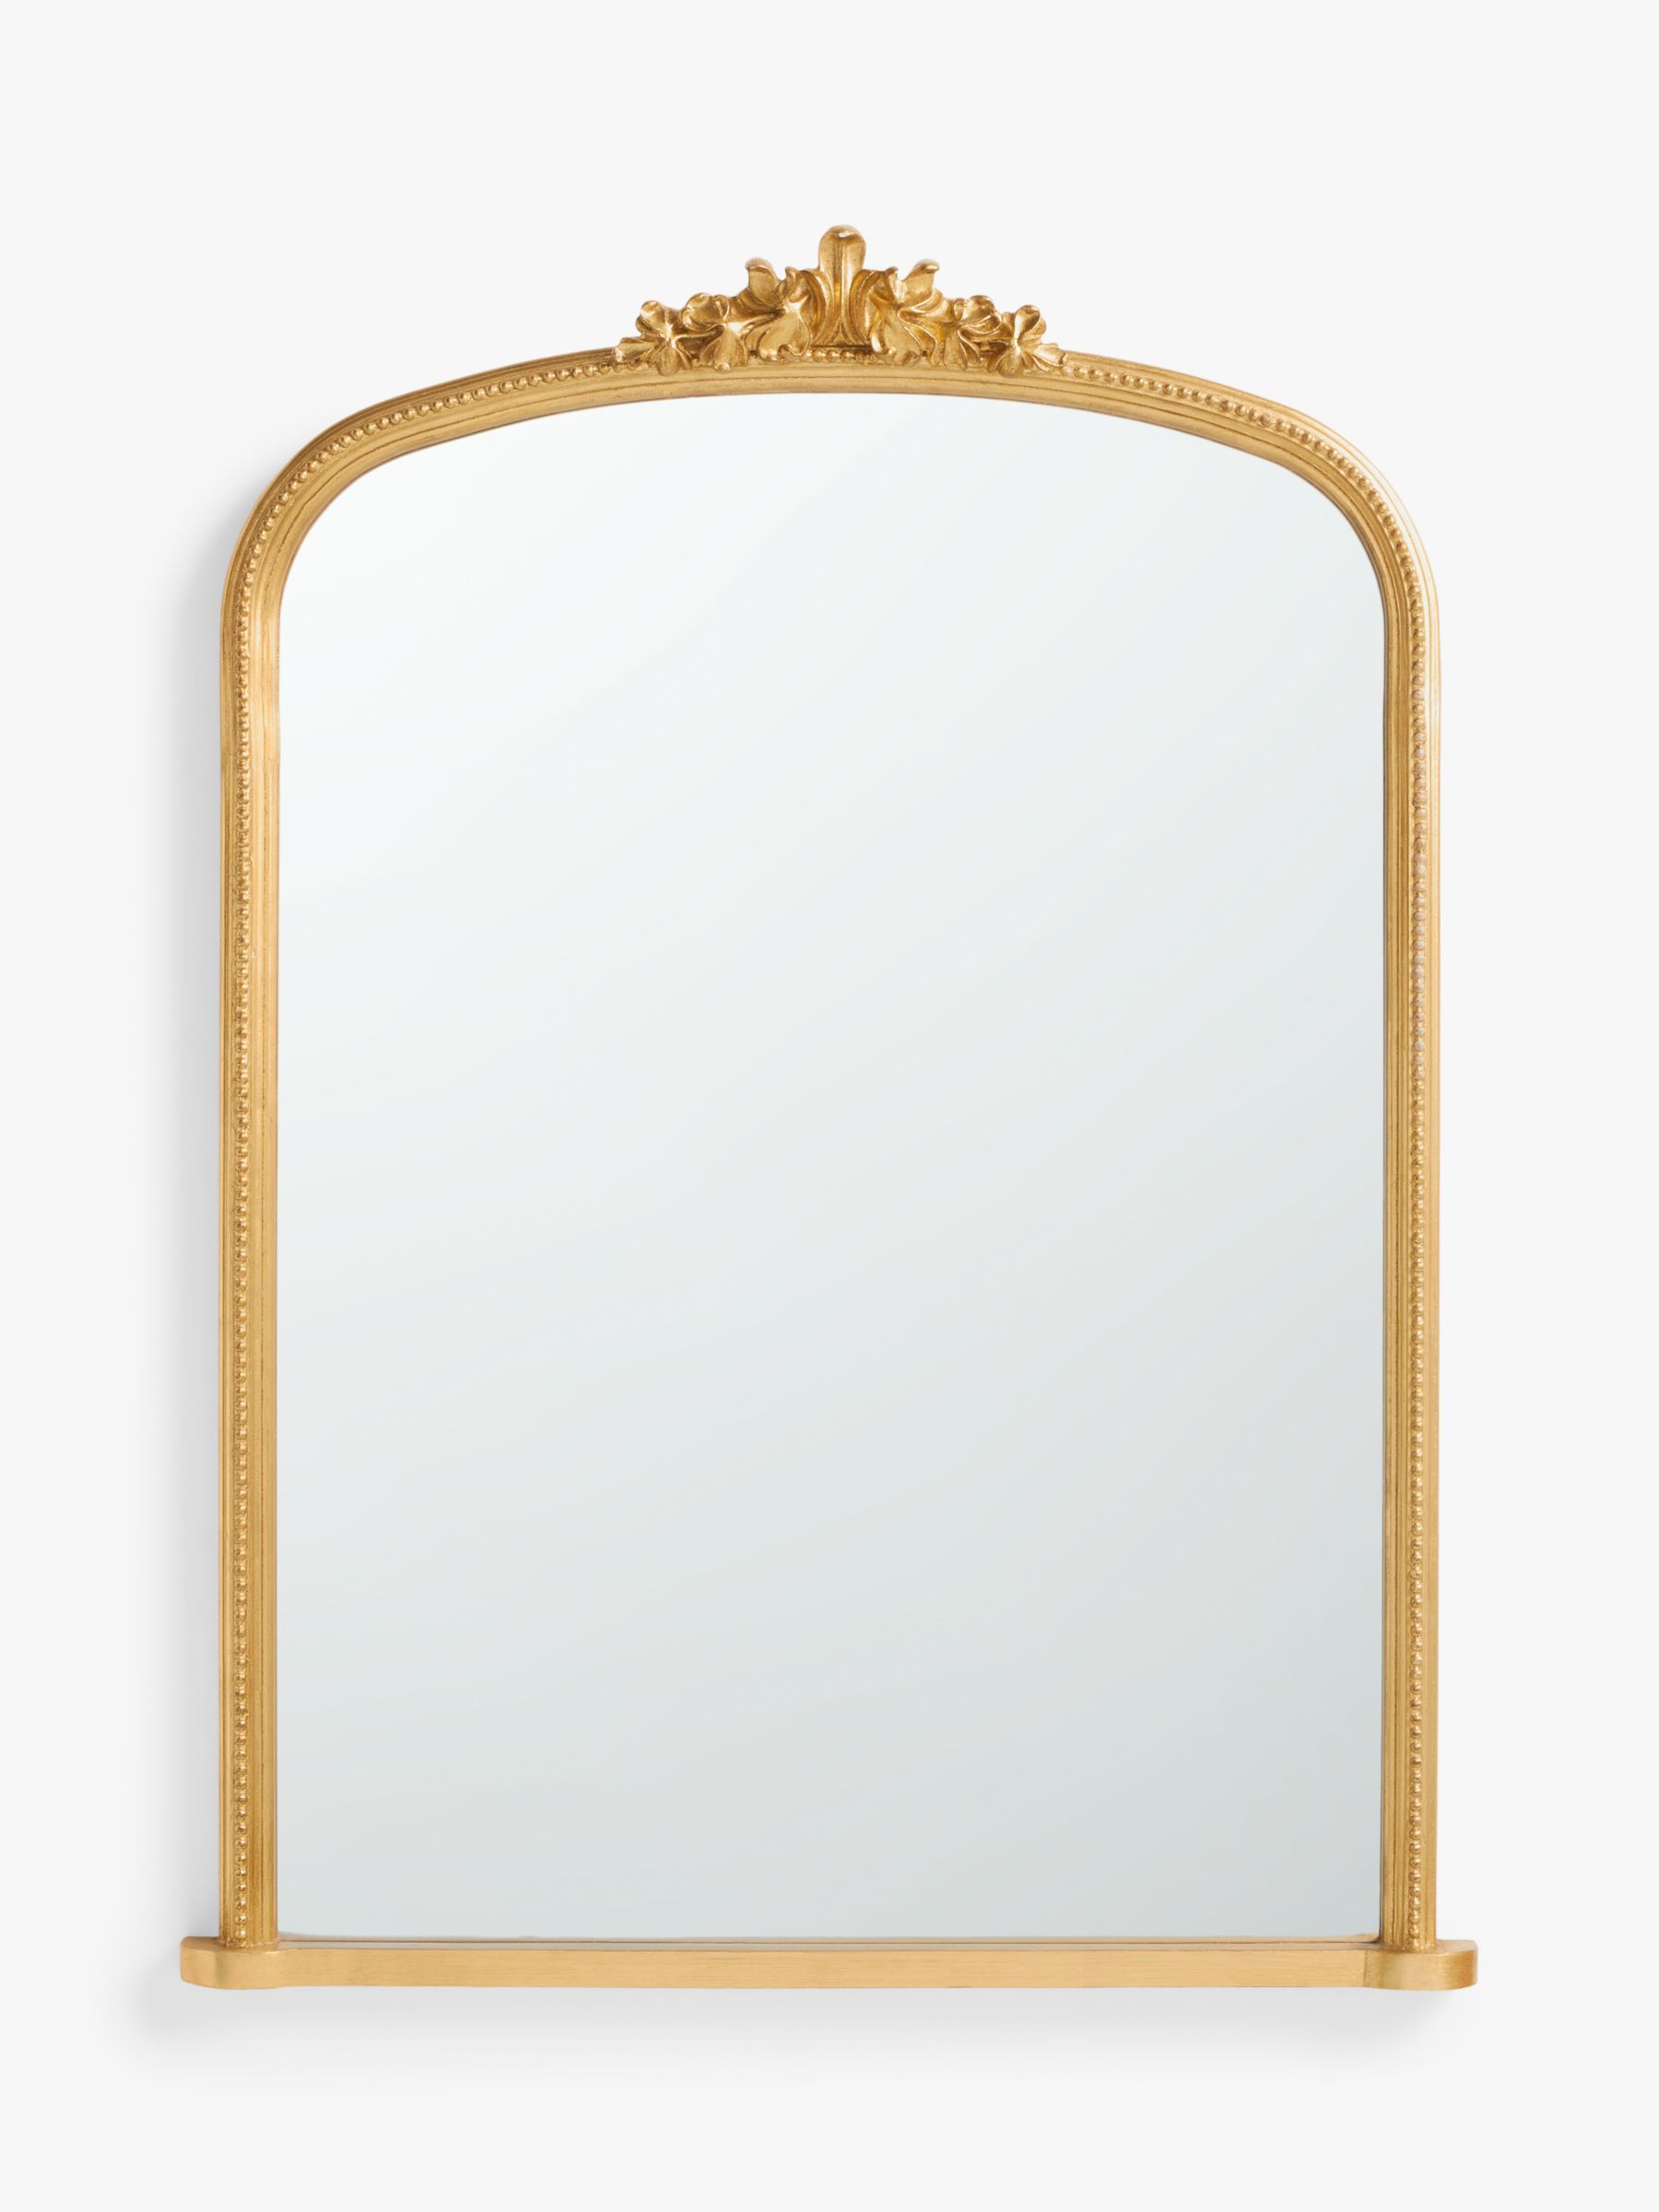 John Lewis Vintage Ornate Wood Frame Overmantle Mirror, 85 x 115cm